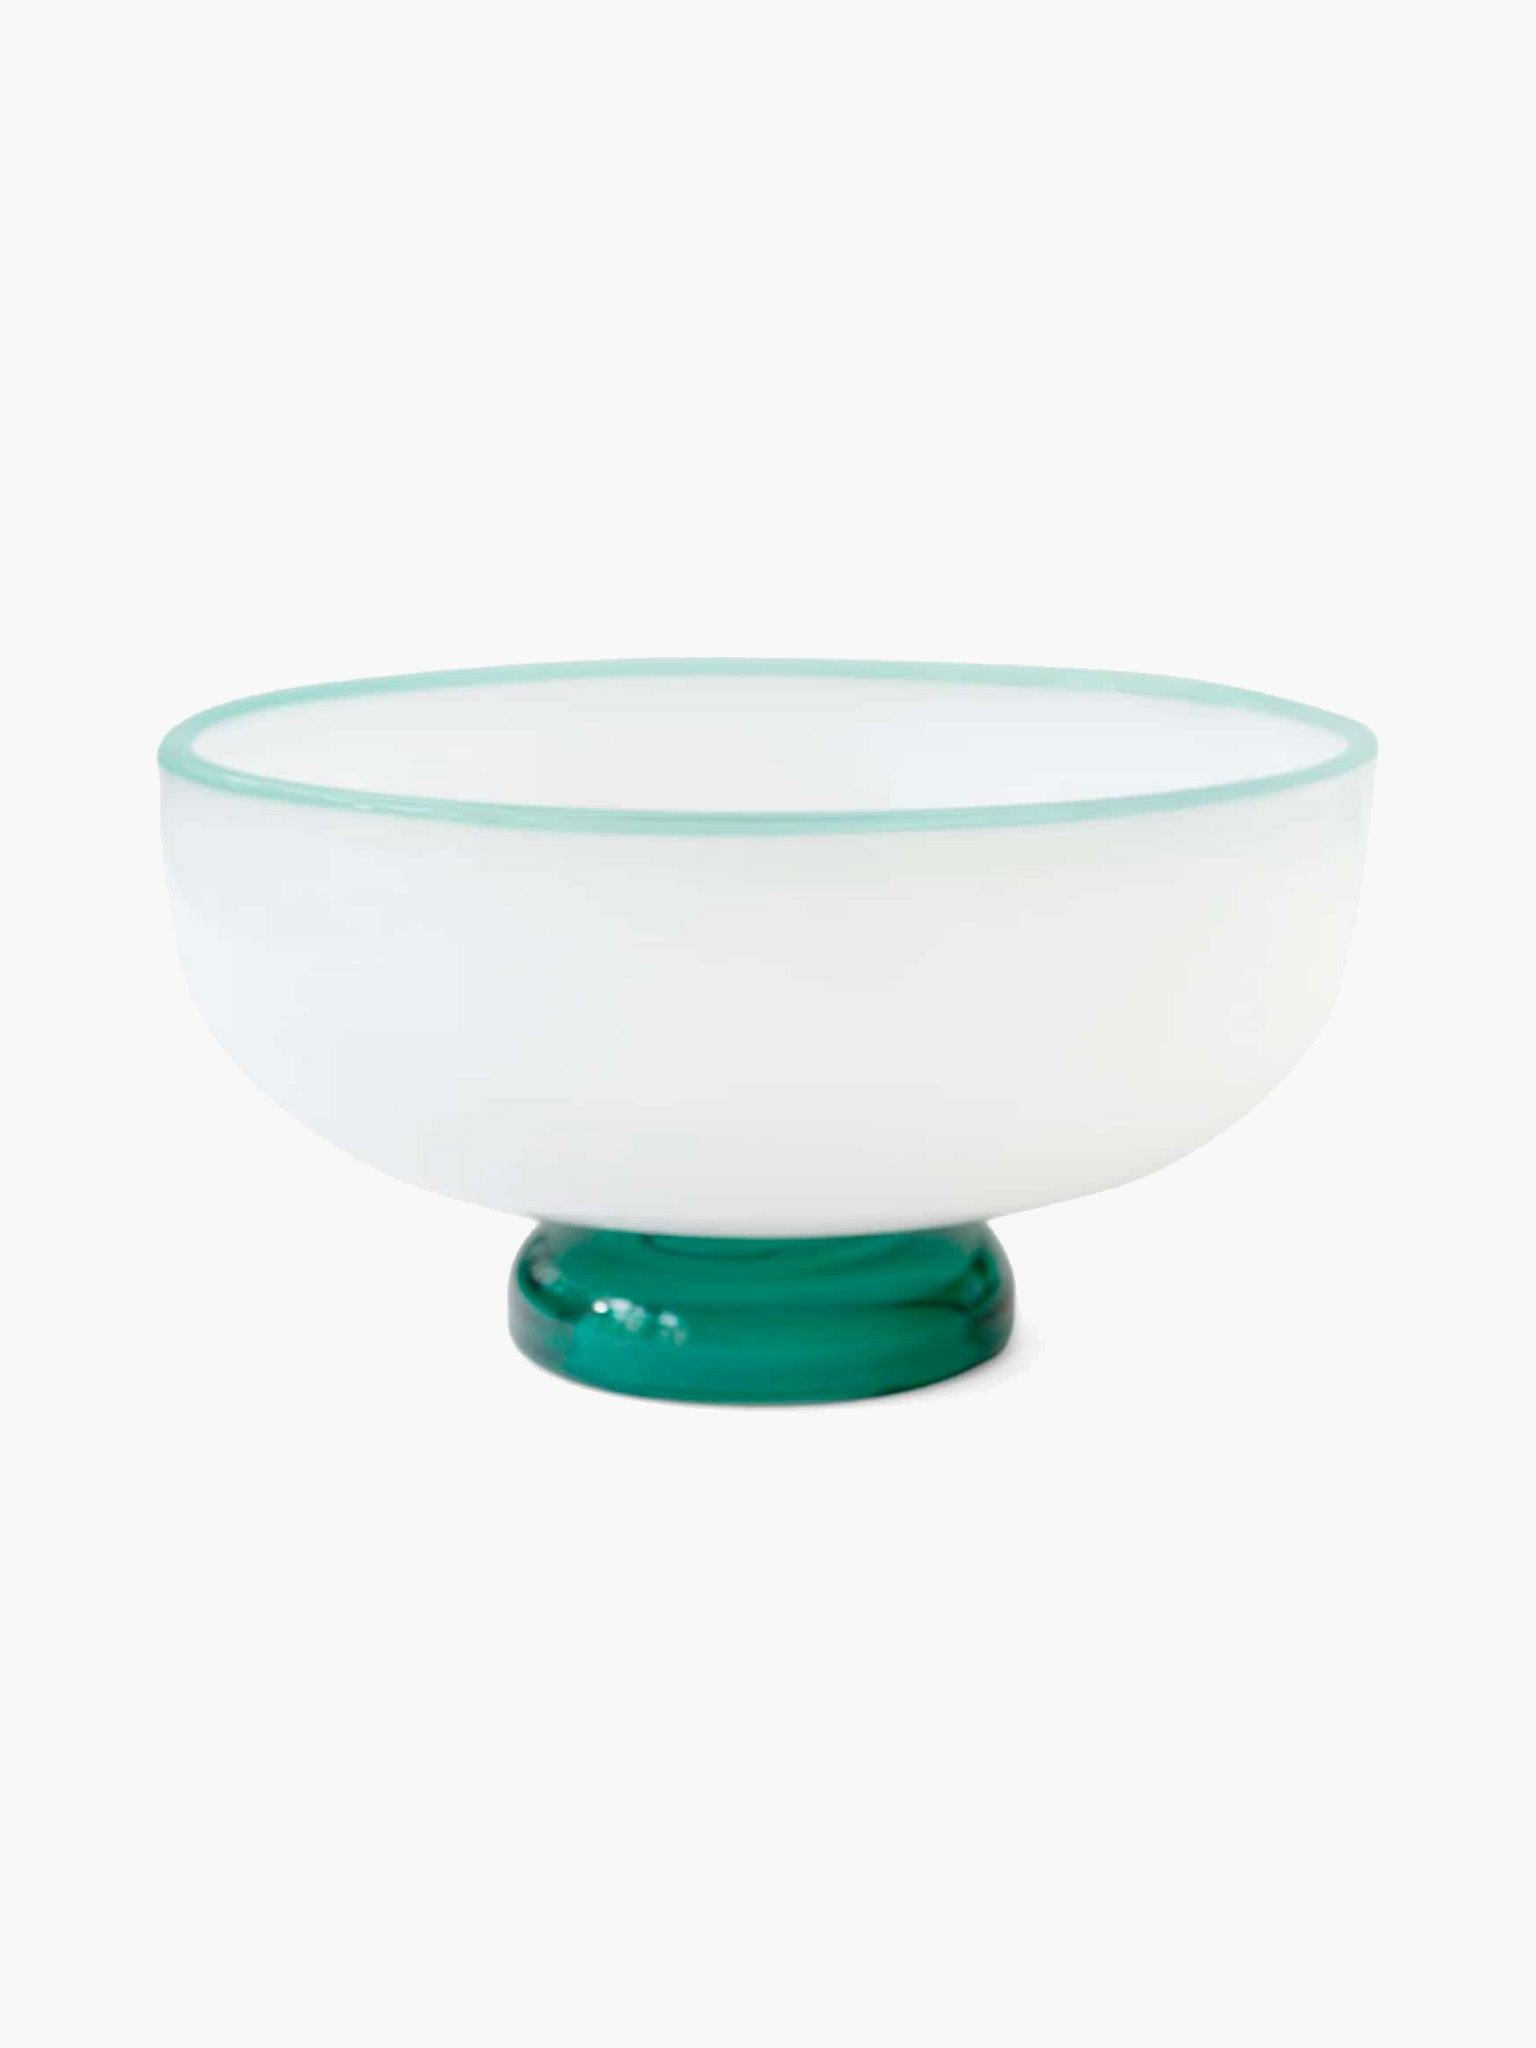 Snow Bowl - White with Green Rim